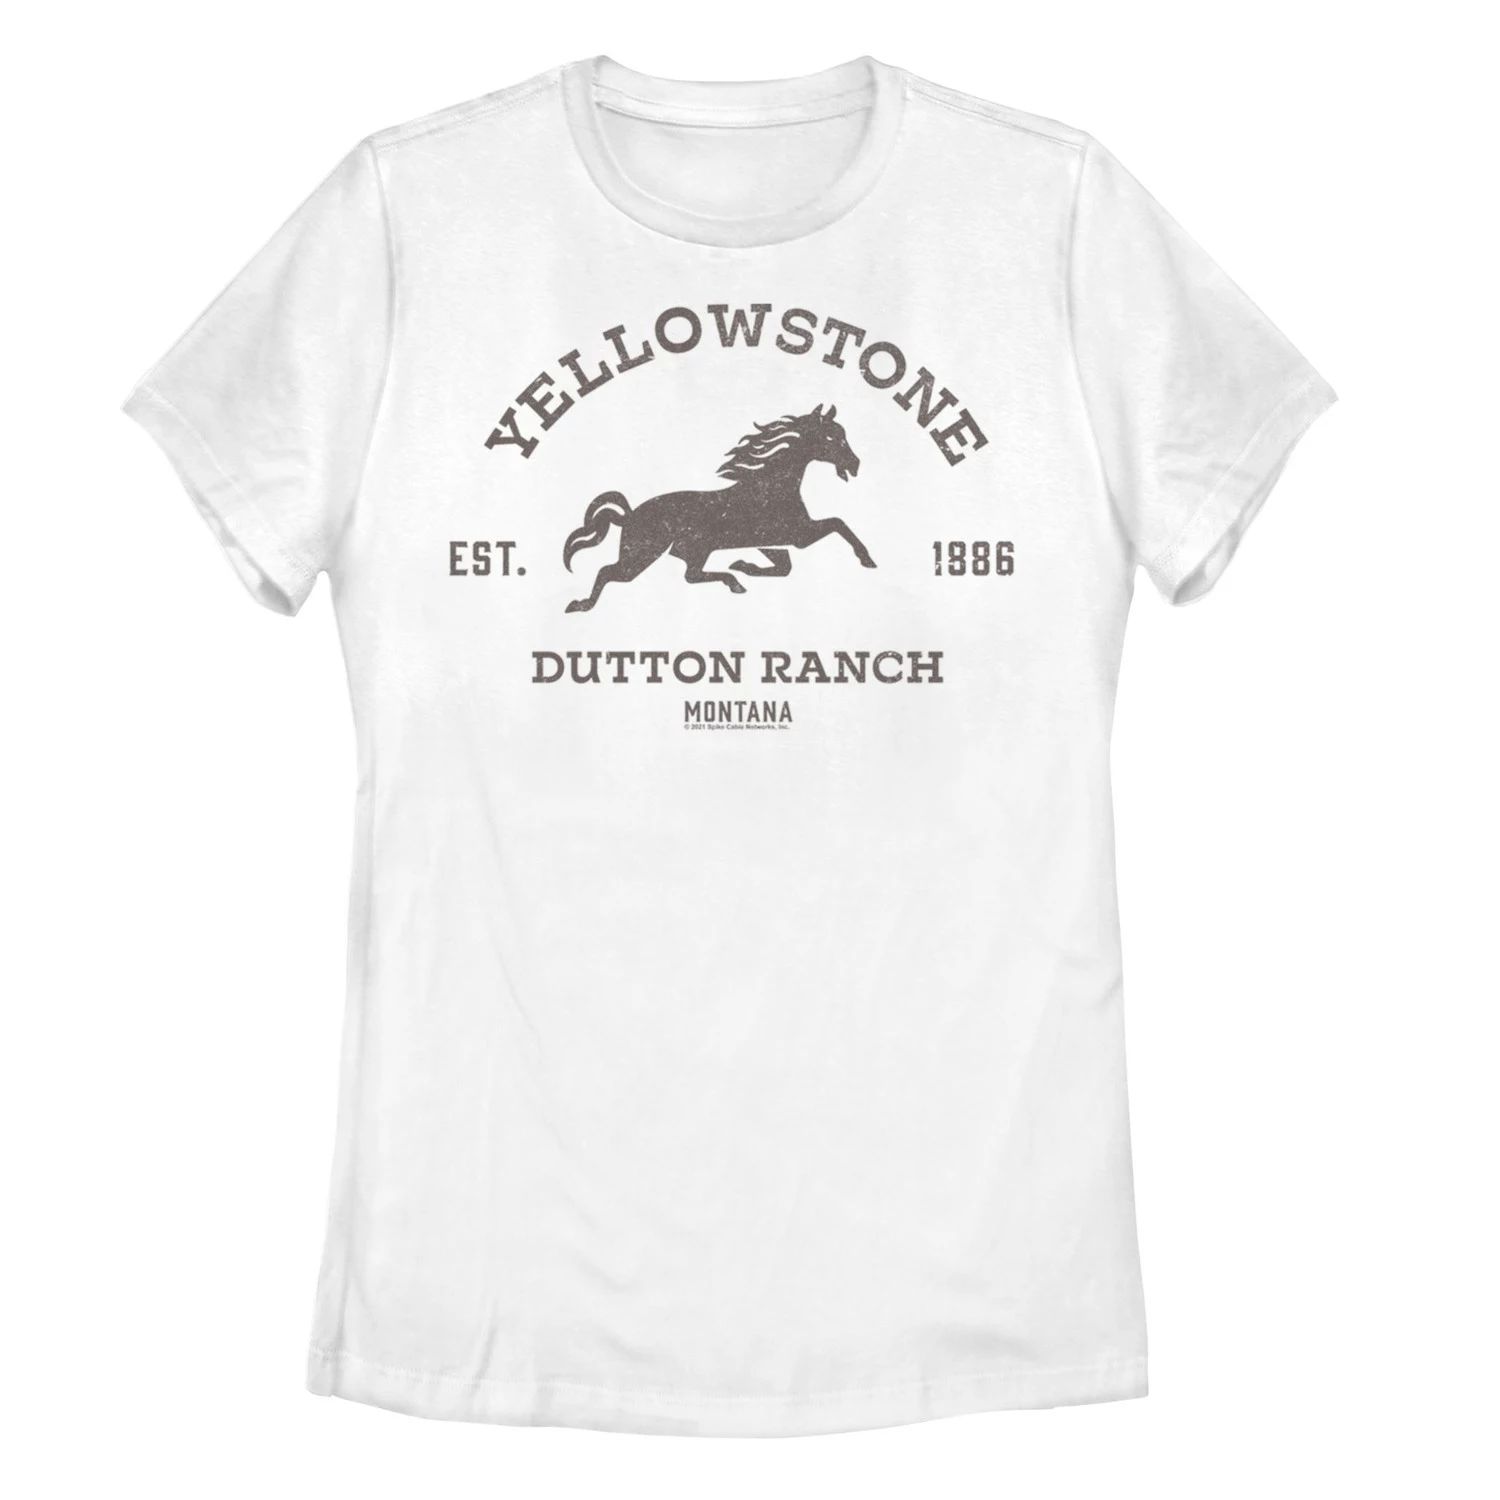 Юниорская футболка с логотипом Yellowstone Dutton Ranch Montana Horse Licensed Character